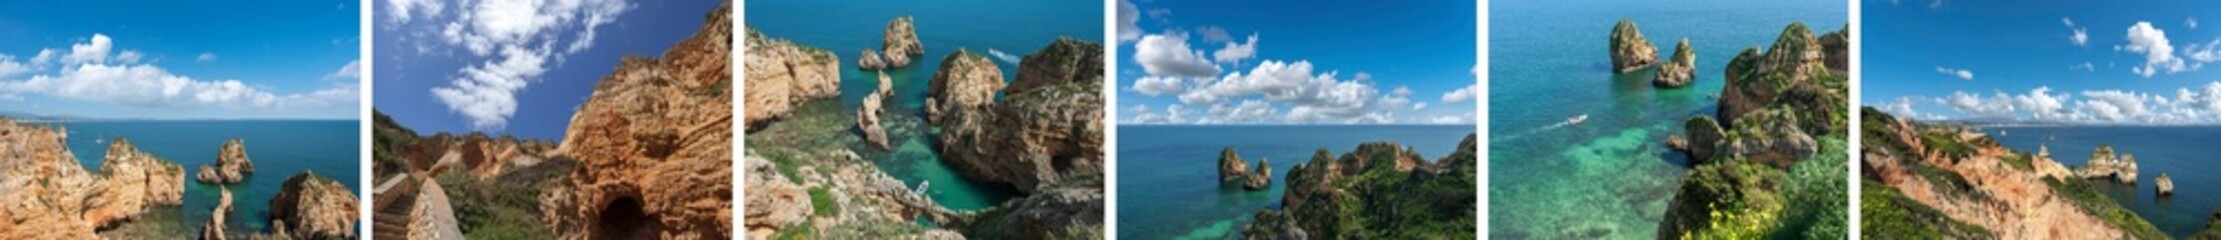 Collage of the rocky coast Ponta da Piedade in Lagos in the Algarve